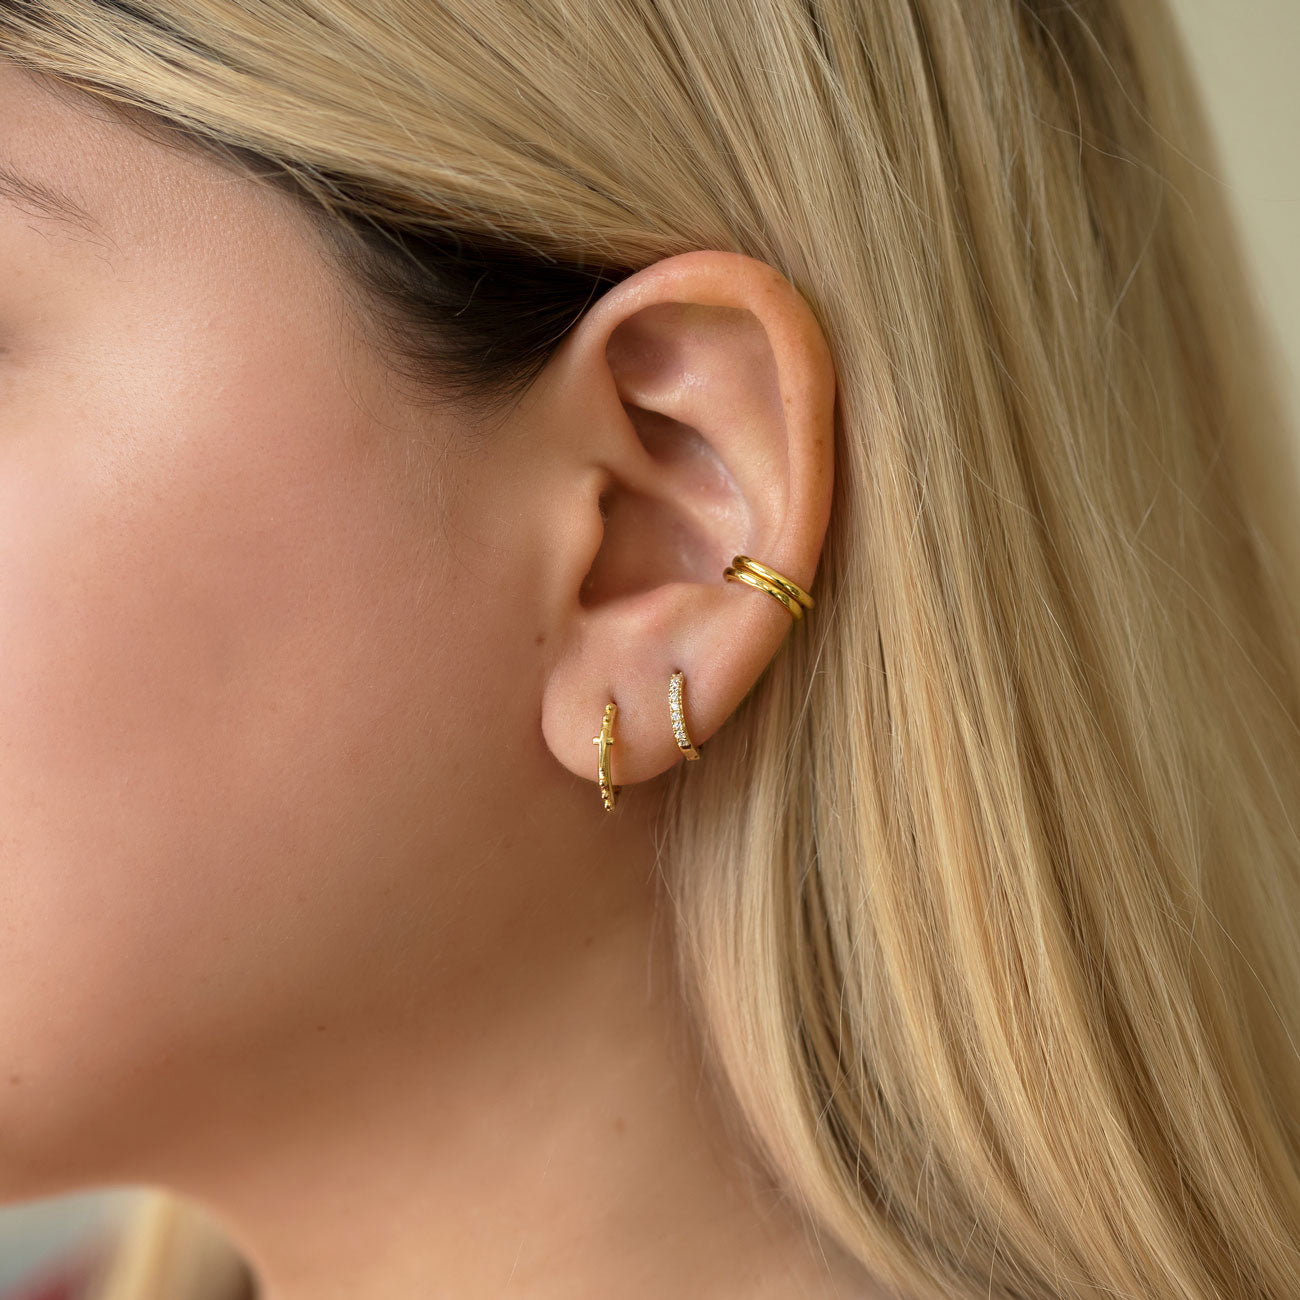 Gold Huggie Earrings - Small Hoops - Earrings for Cartilage. Helix 14K Gold Filled / 15mm